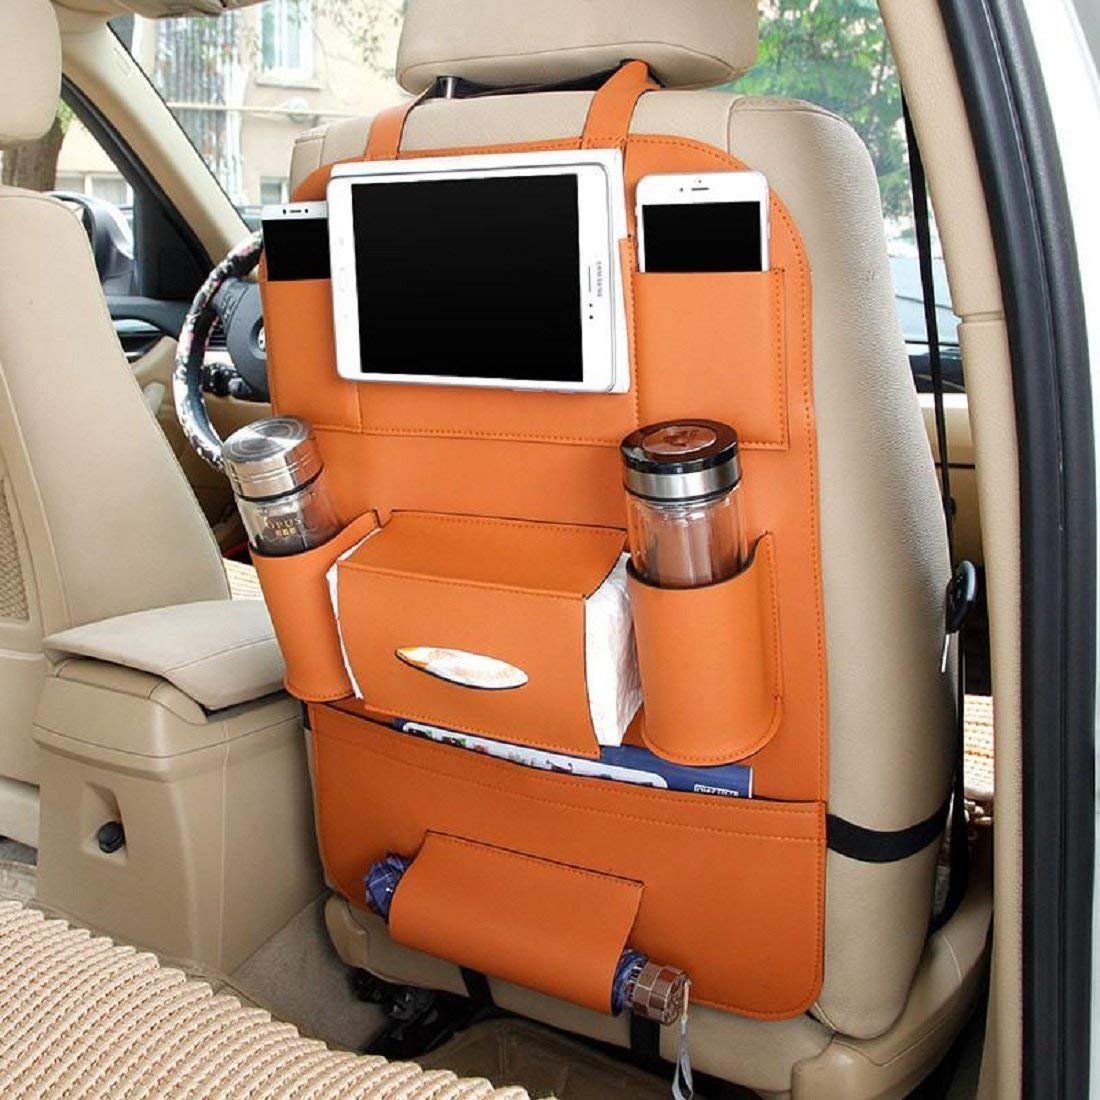 AllExtreme EXCOWPT Universal PU Leather Car Back Seat Organizer Multi  Pocket Backseat Bag with Tissue & Bottle Holder (Tan)